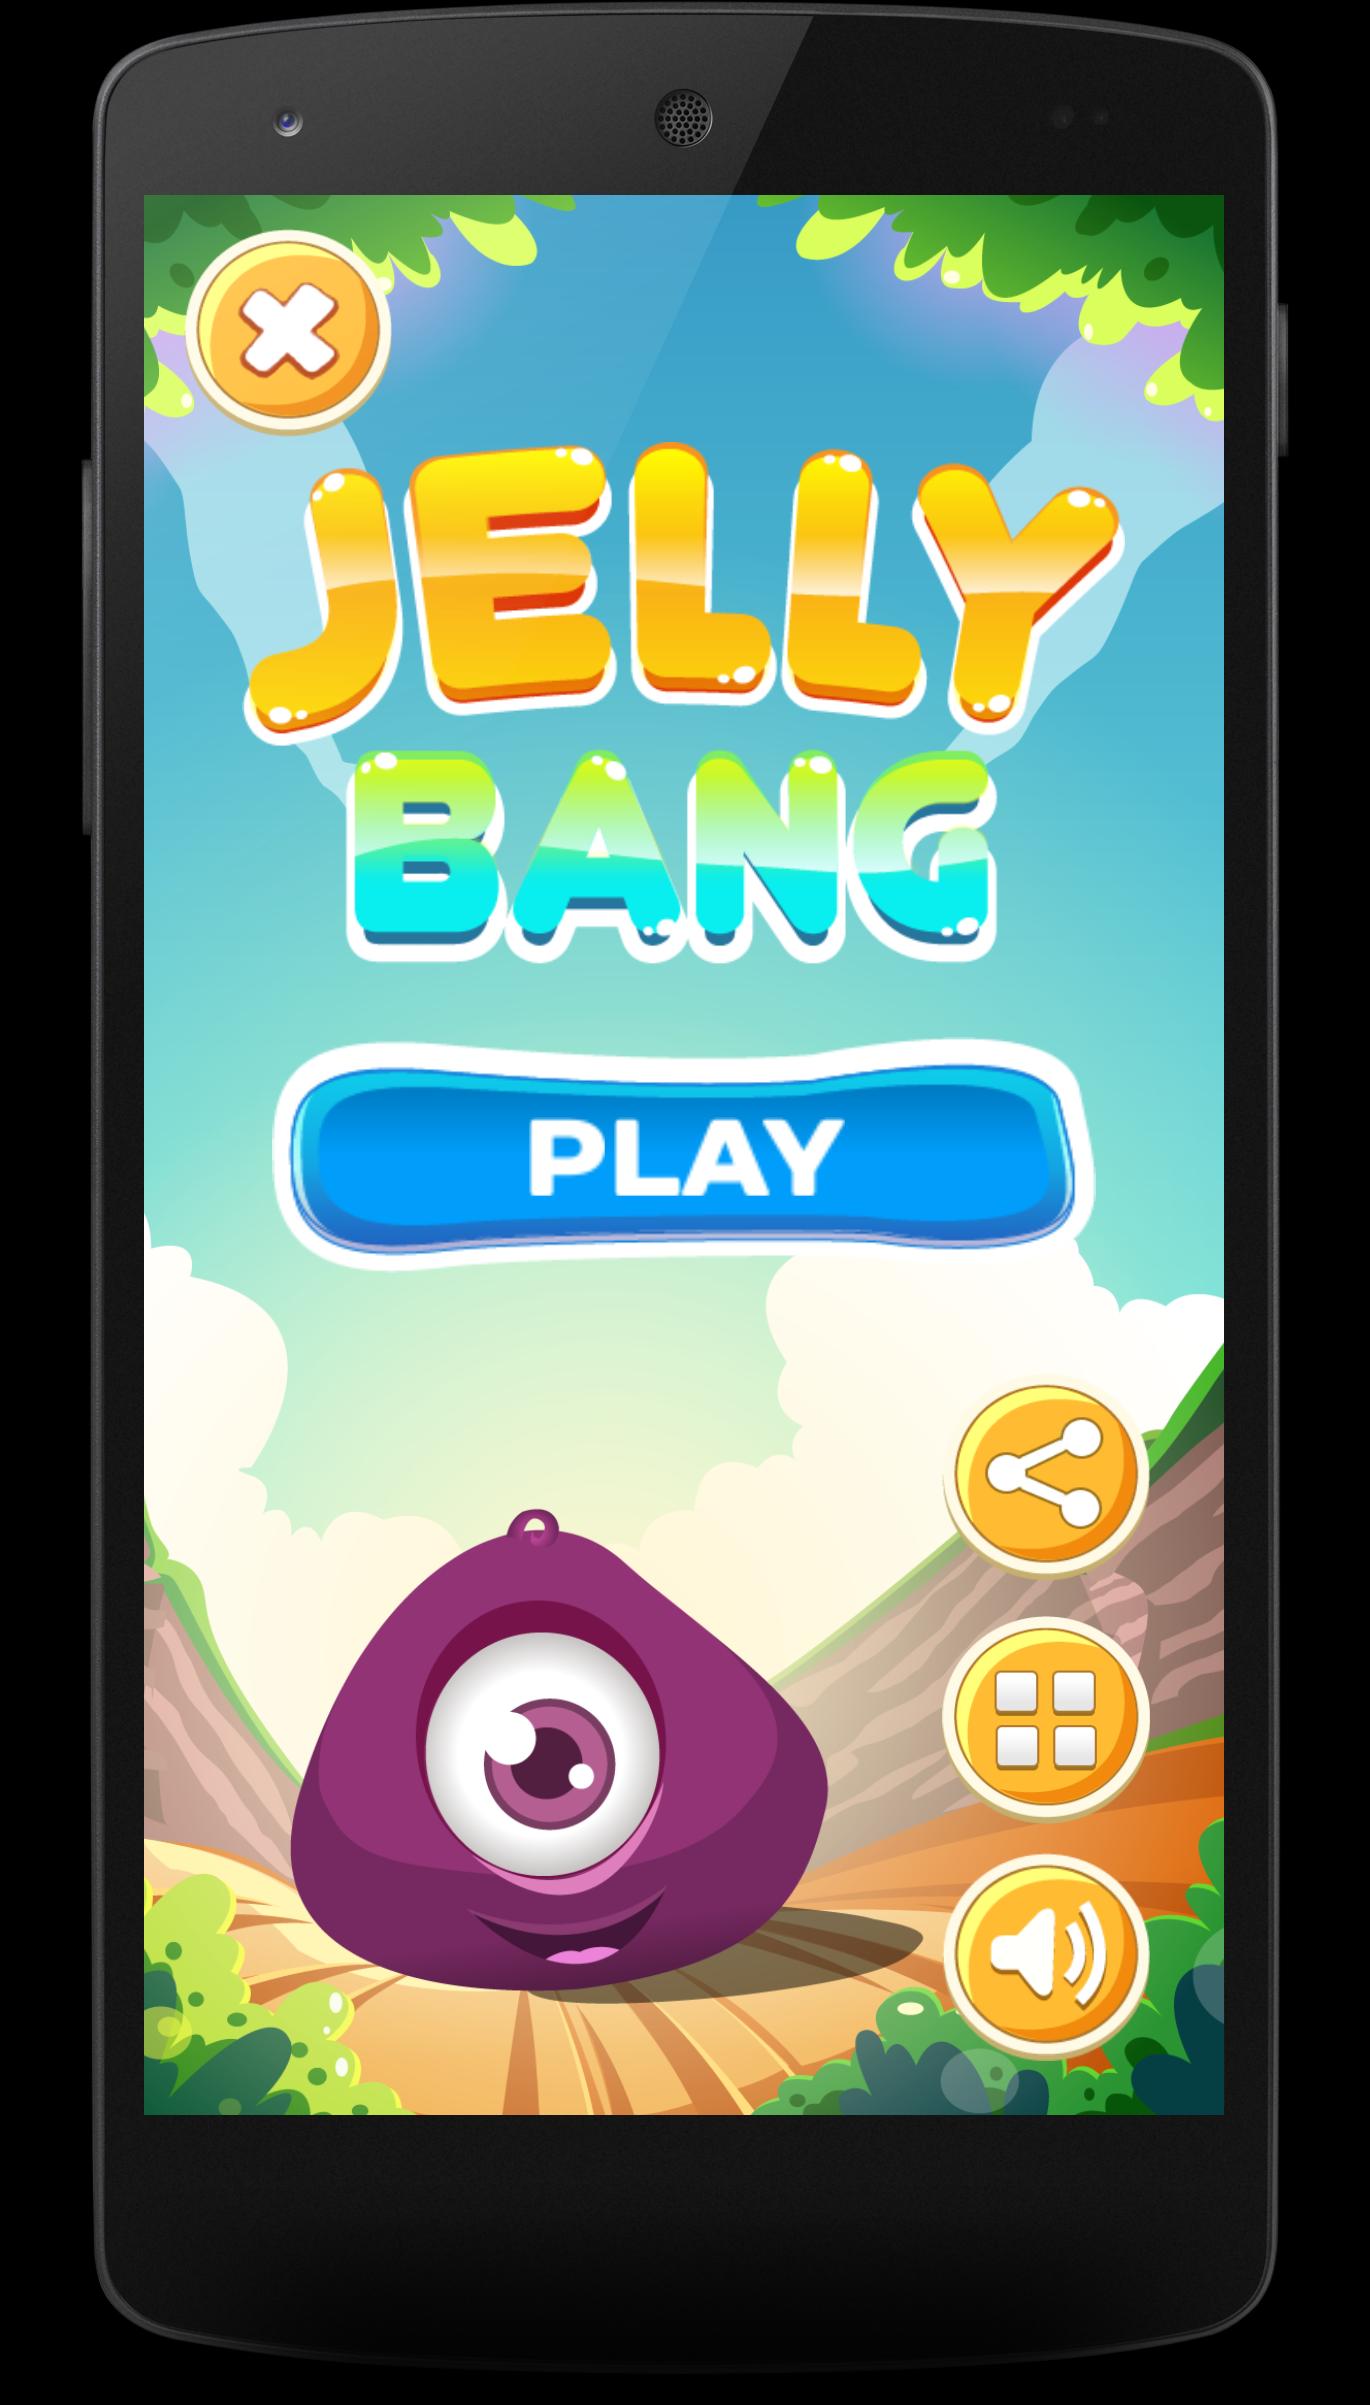 Jelly mod. Jelly Star картинки с надписями. Jelly q ray.